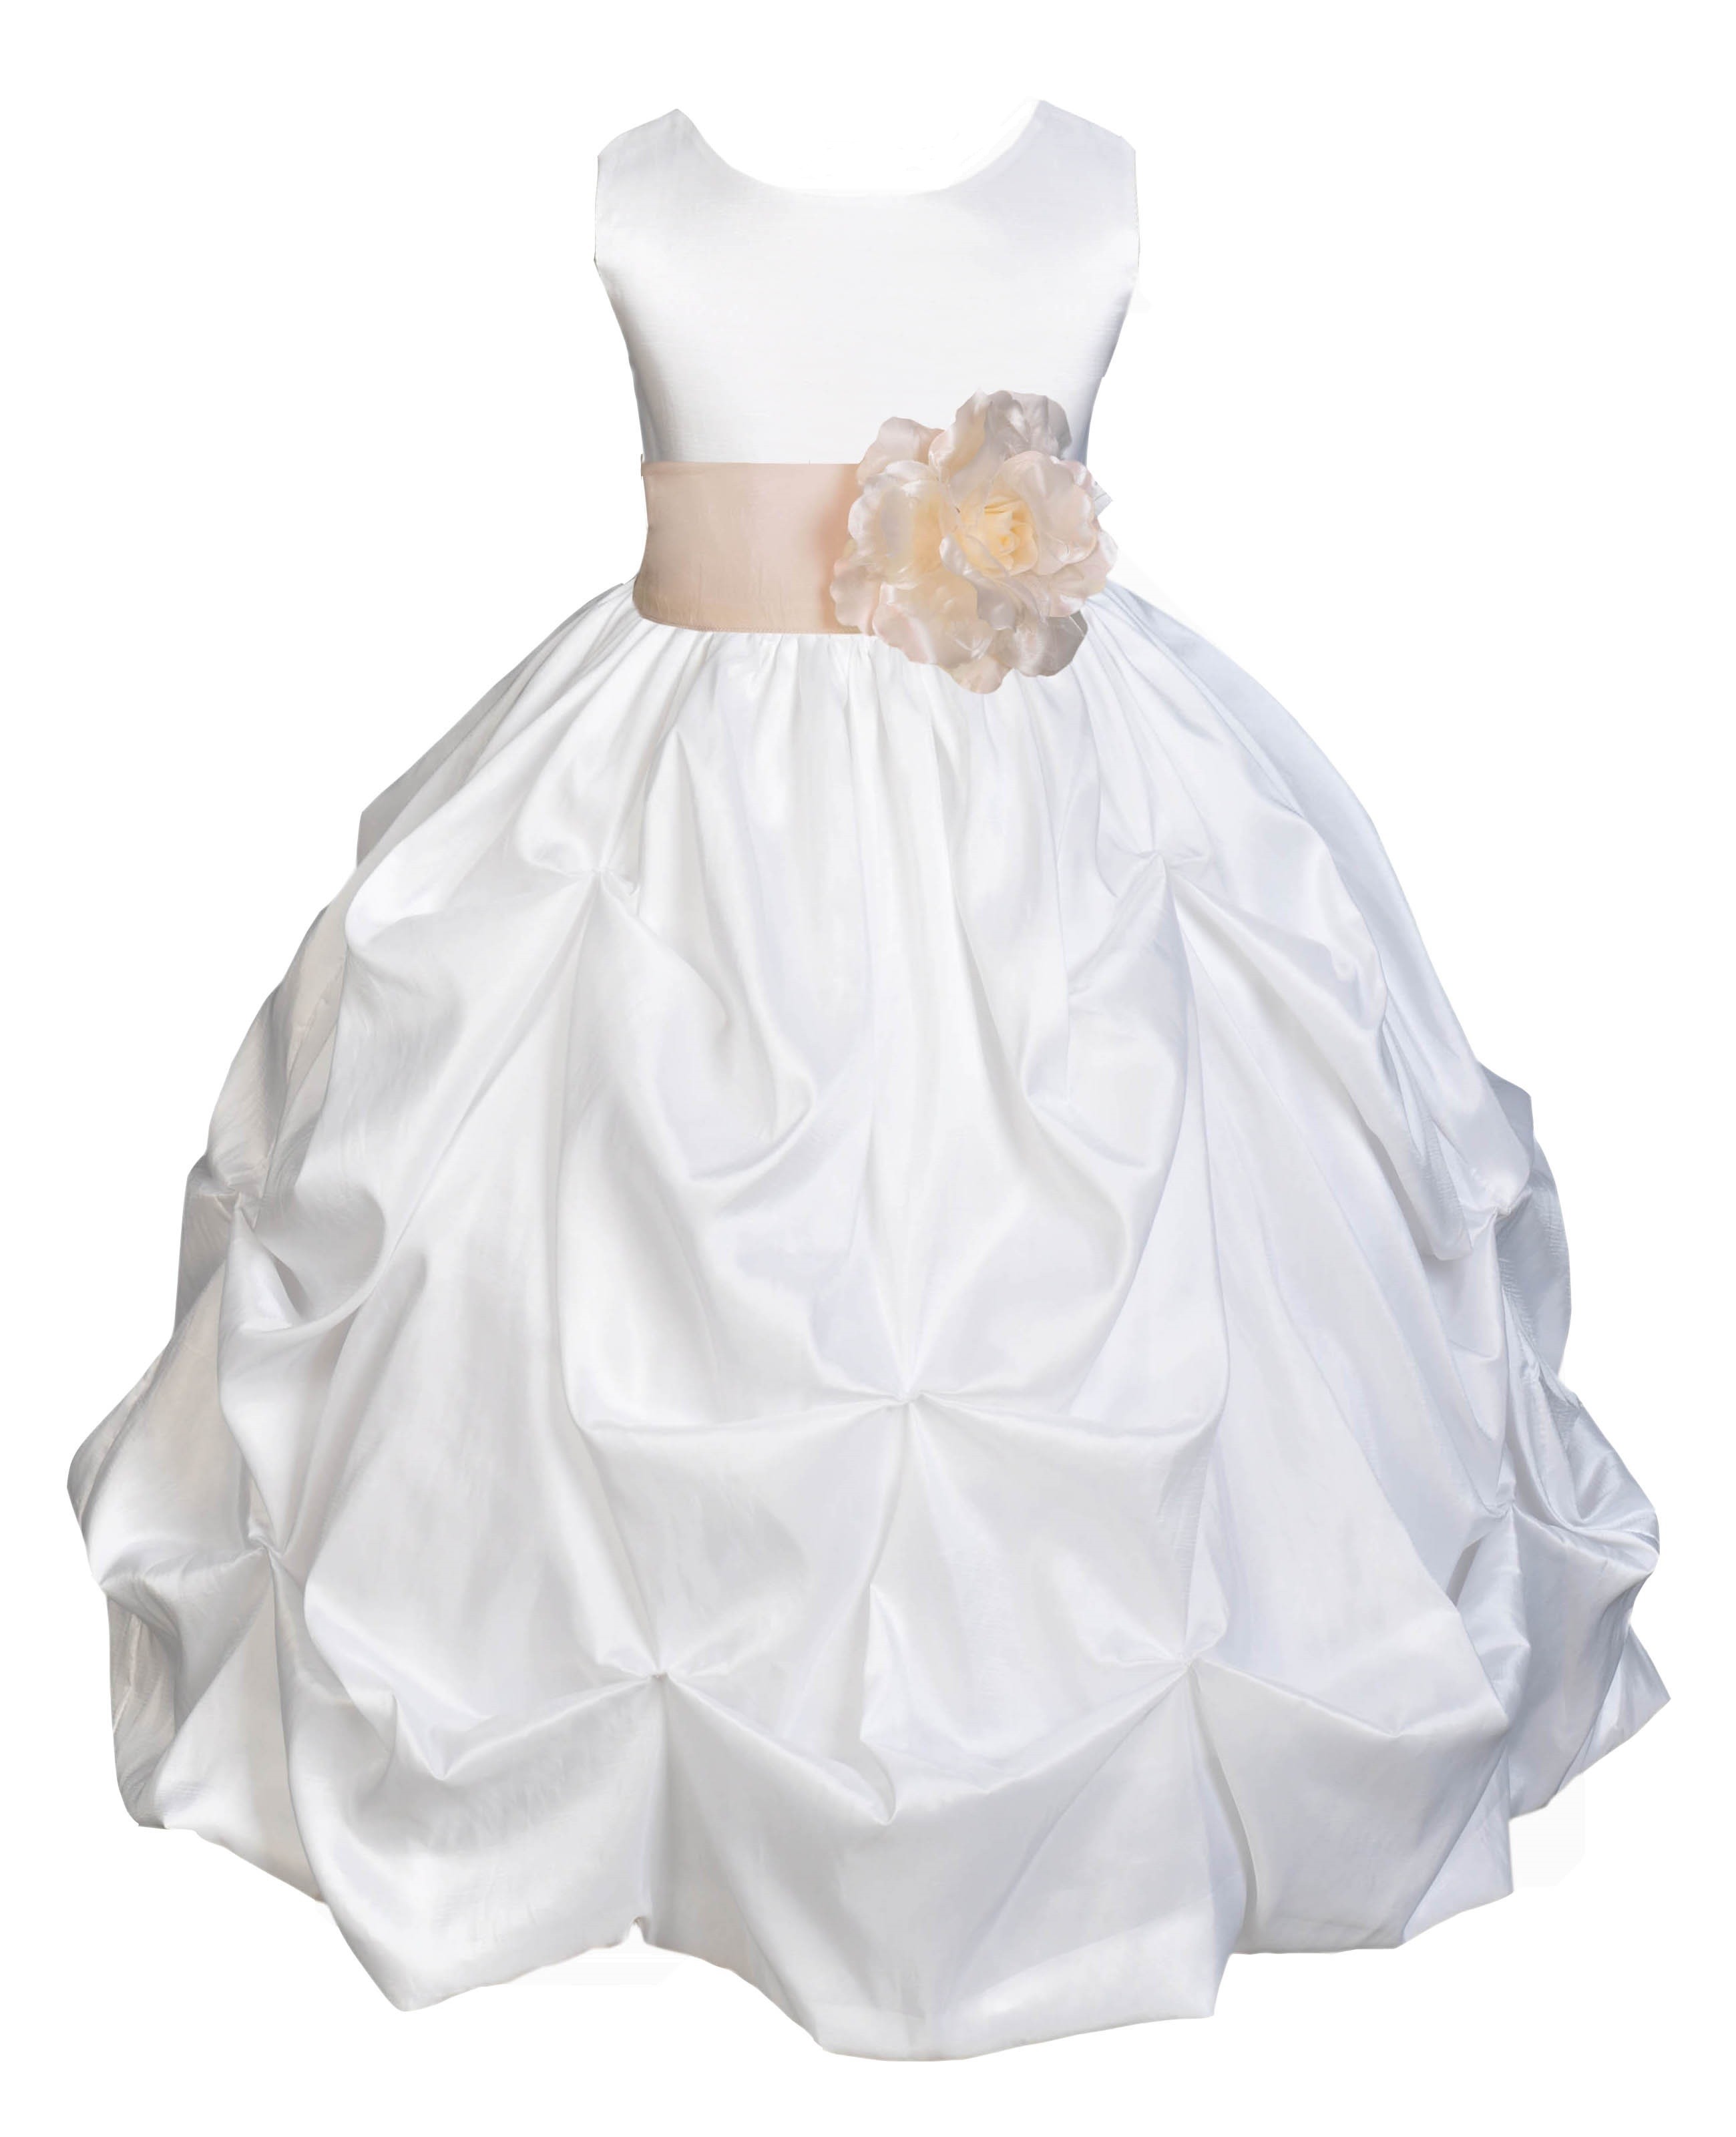 Ivory/Champagne Satin Taffeta Pick-Up Bubble Flower Girl Dress 301S